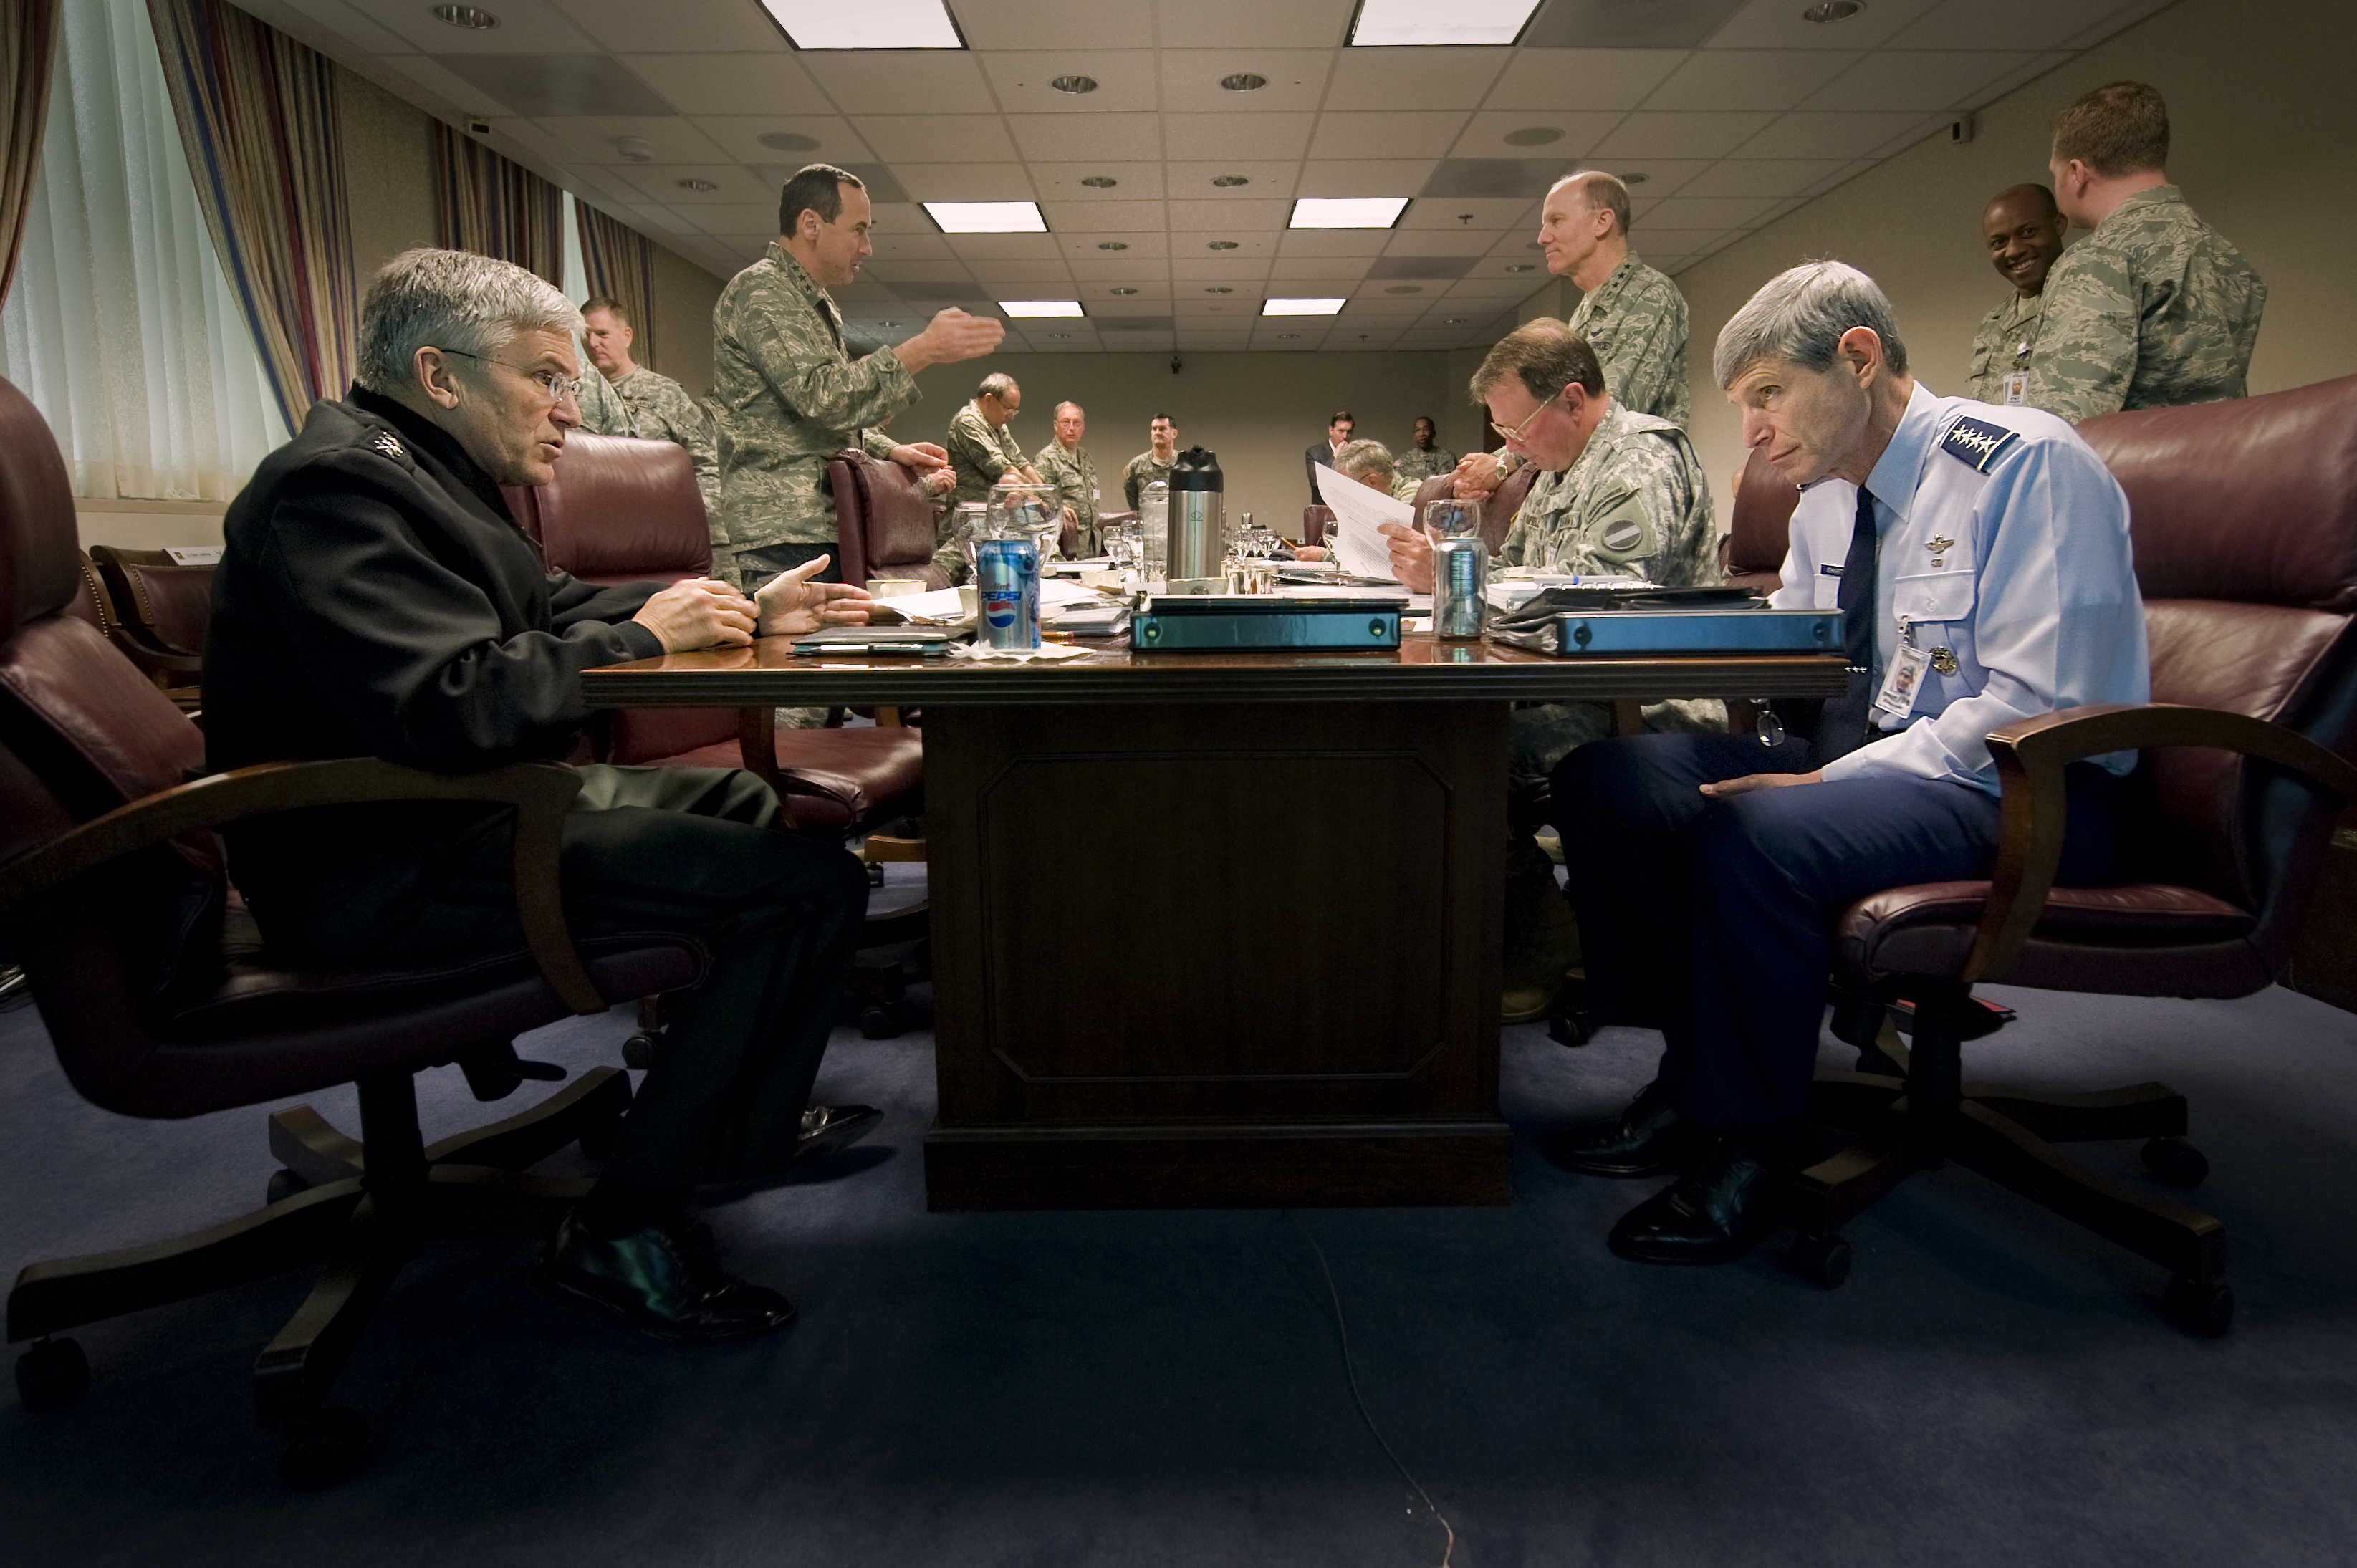 Flickr - The U.S. Army - Army, Air Force leaders meet